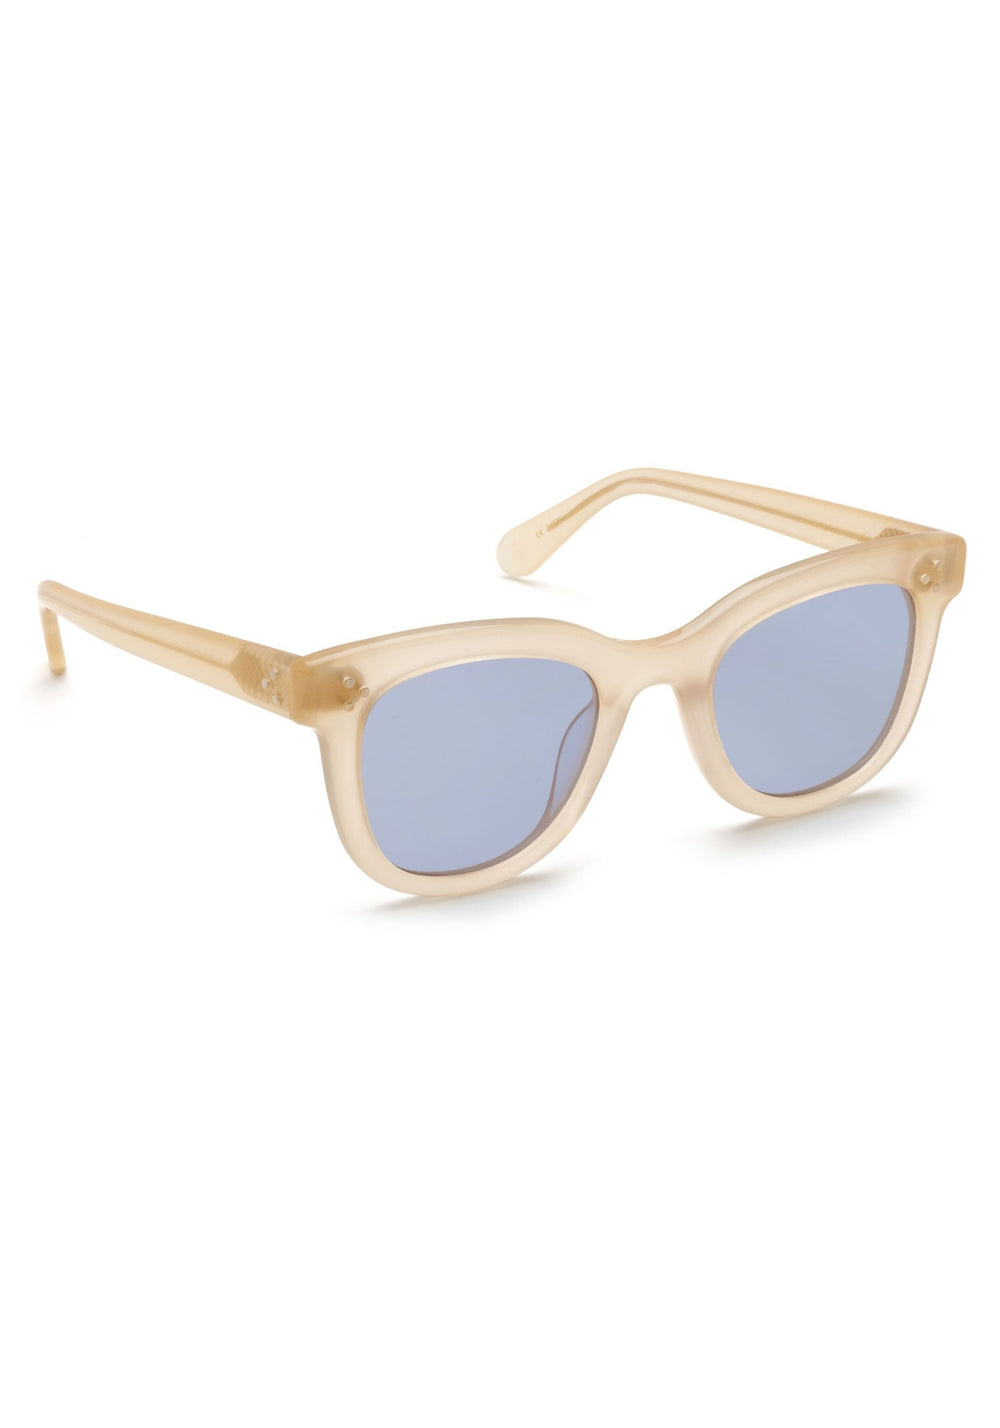 KREWE SUNGLASSES - JENA | Blonde + Custom Vanity Tint handcrafted, luxury blonde oversized sunglasses with custom blue tinted lenses